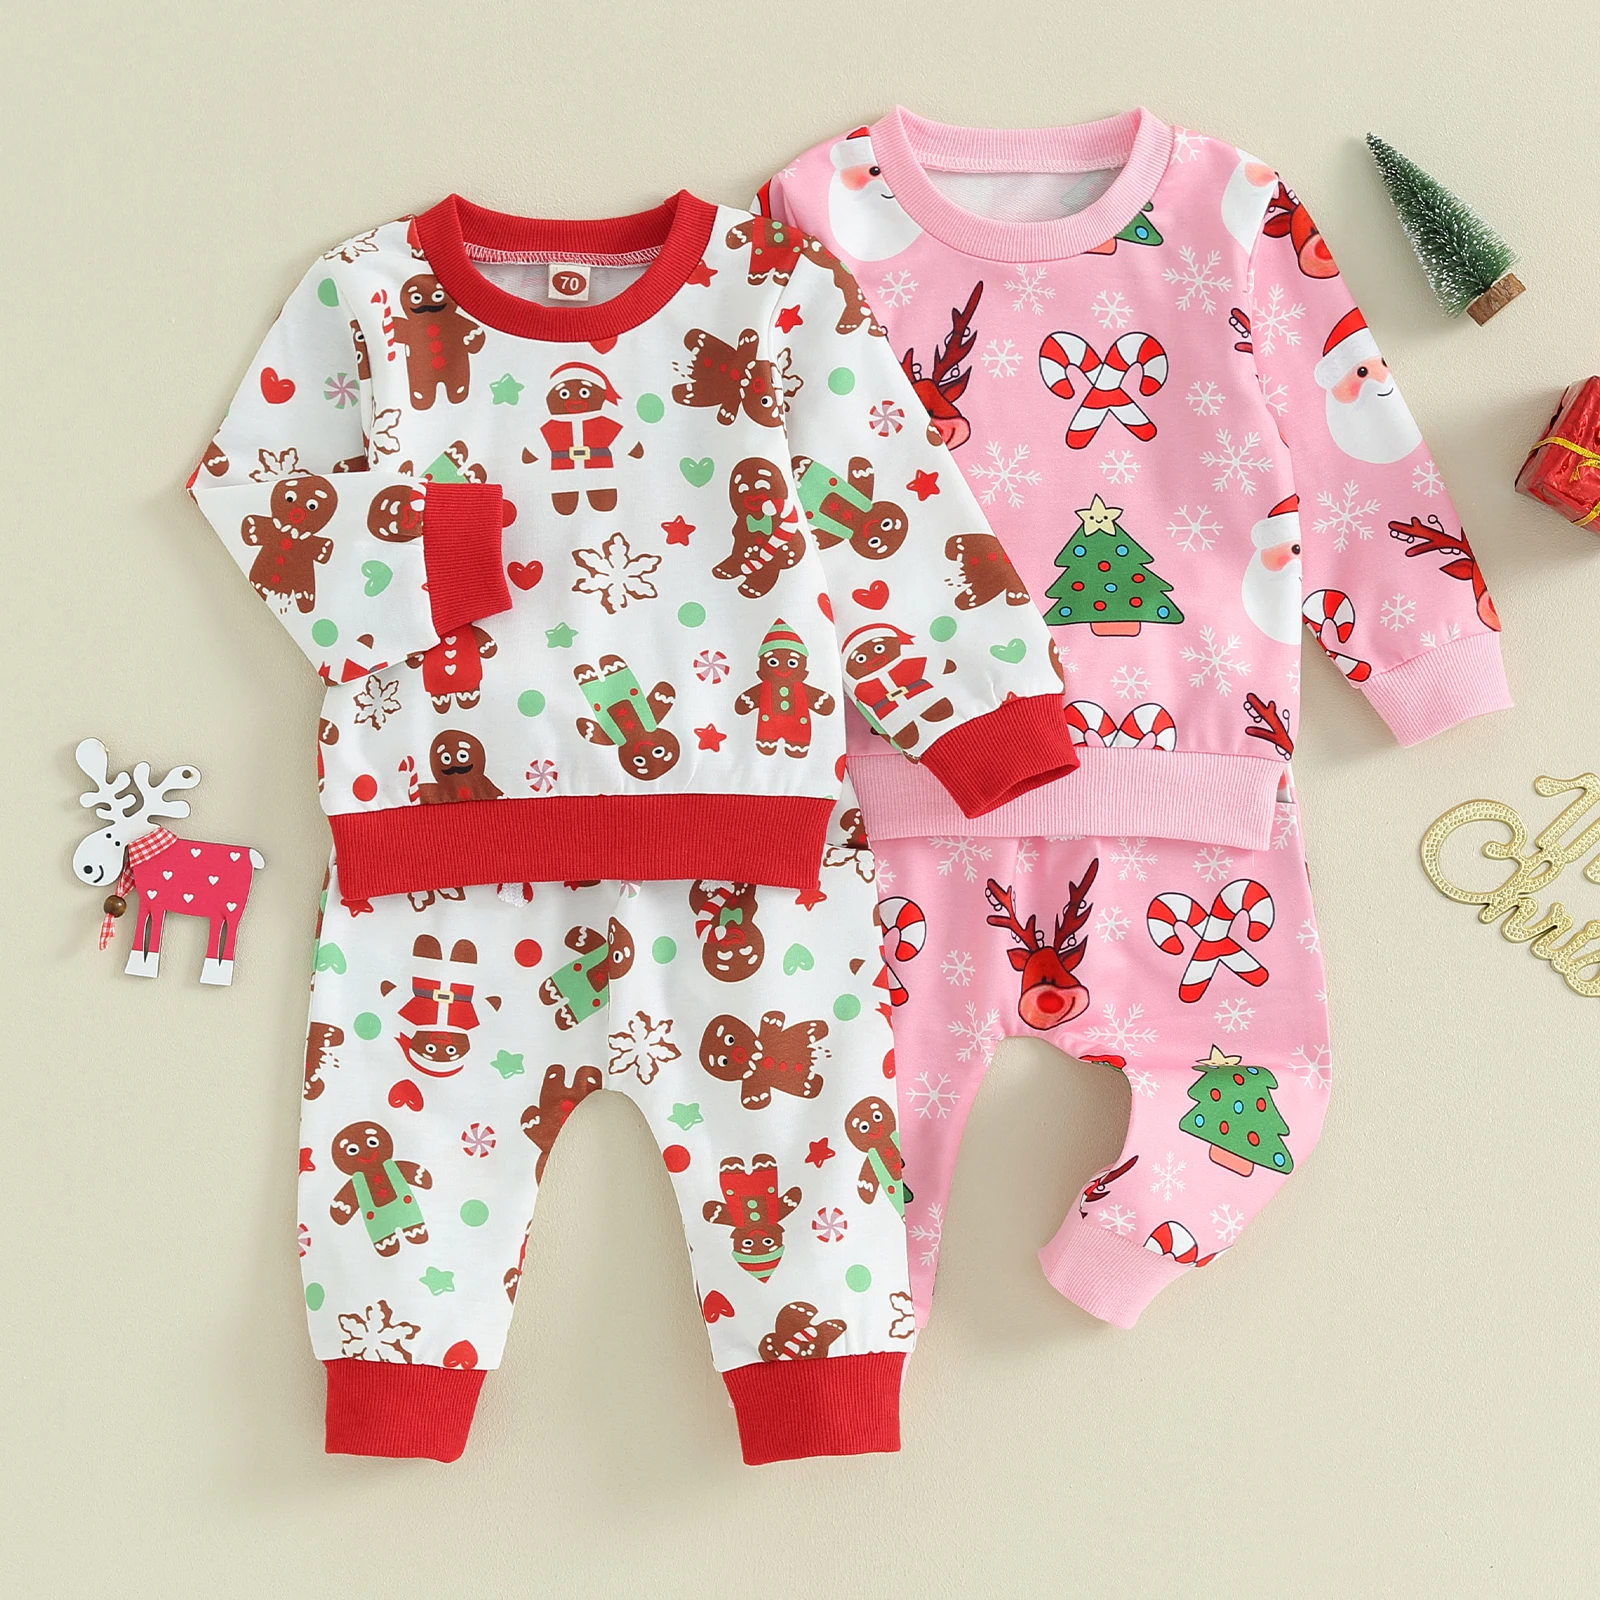 

EWODOS 0-3 Years Baby Girls Outfit Sets Christmas Santa Claus Print Long Sleeve Sweatshirt and Pants Set for Toddler 2 PCS Suits